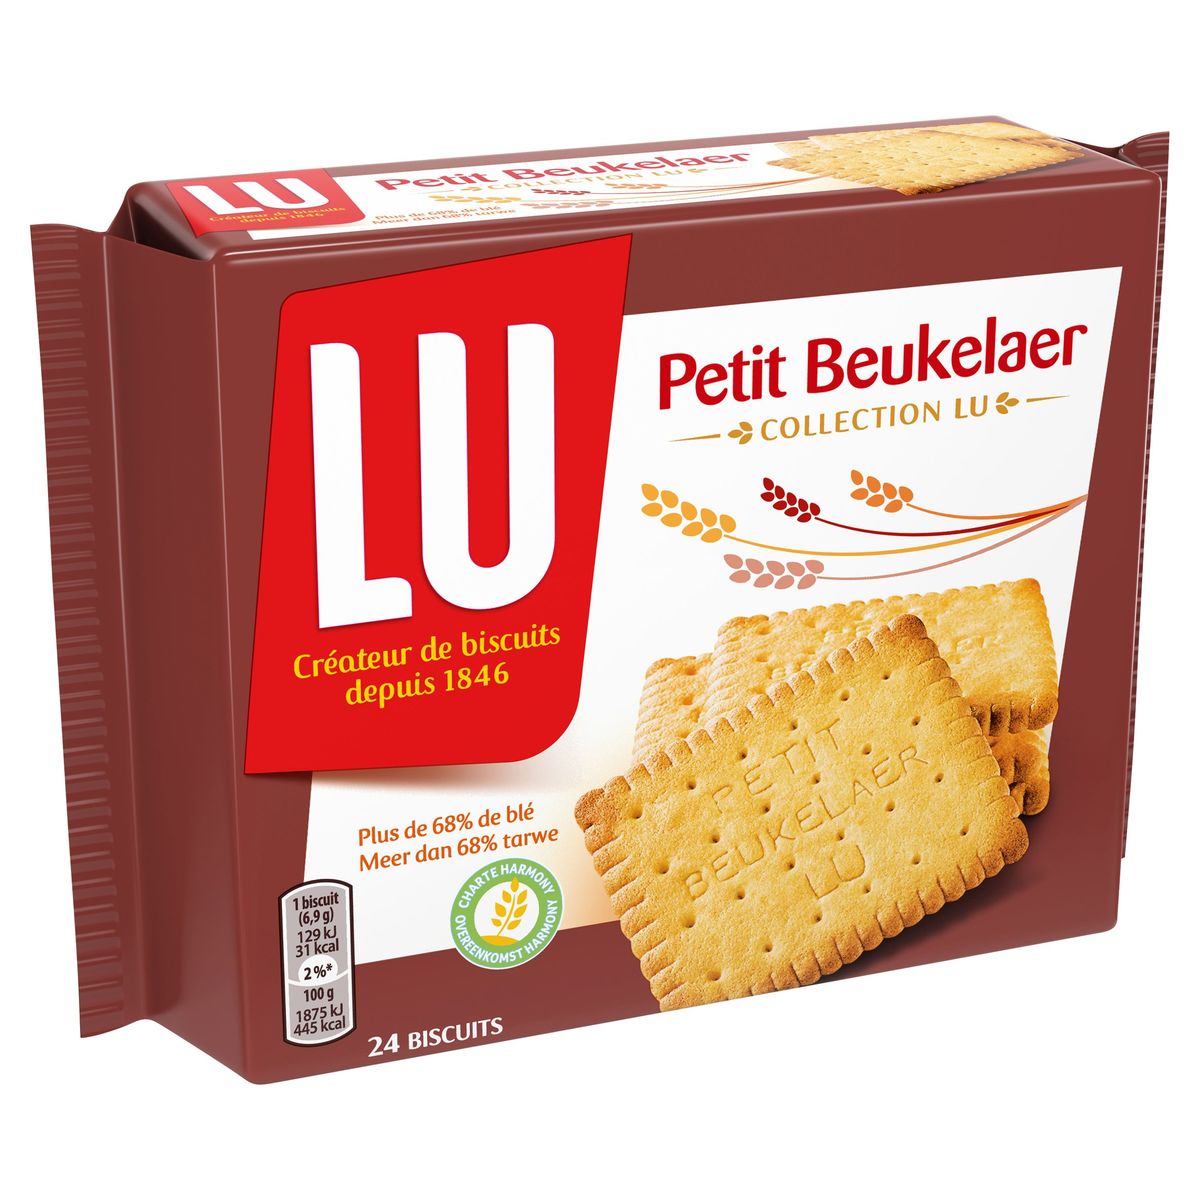 LU Petit Beukelaer Biscuits 165 g